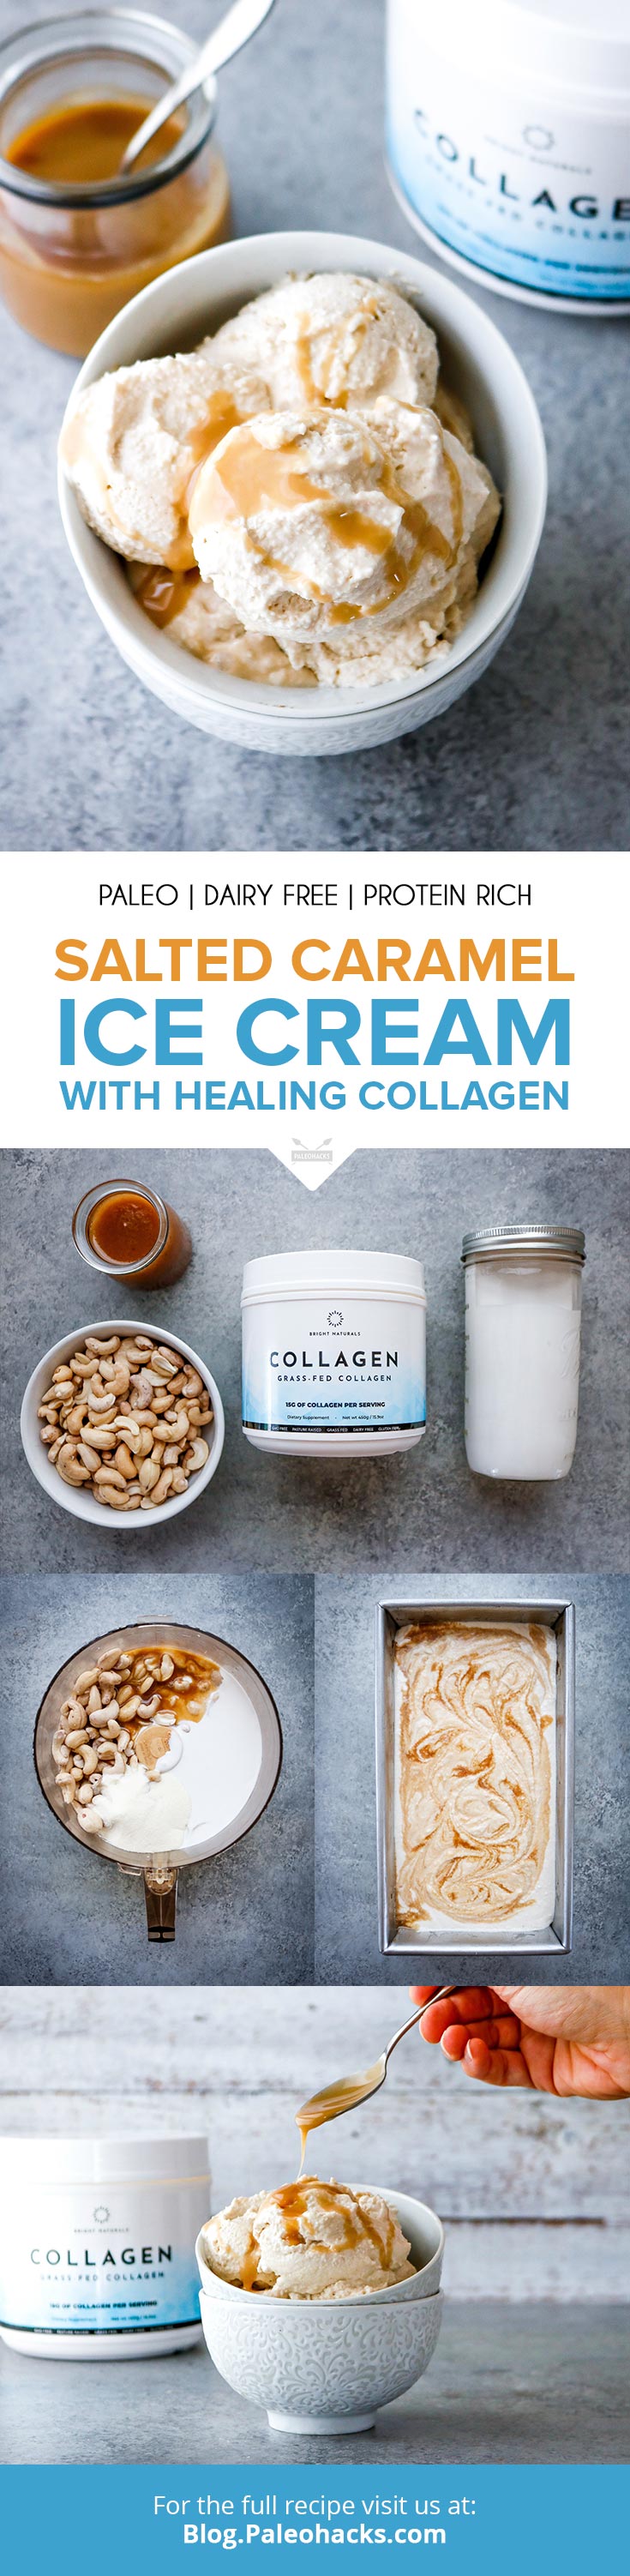 Salted caramel ice cream with collagen recipe